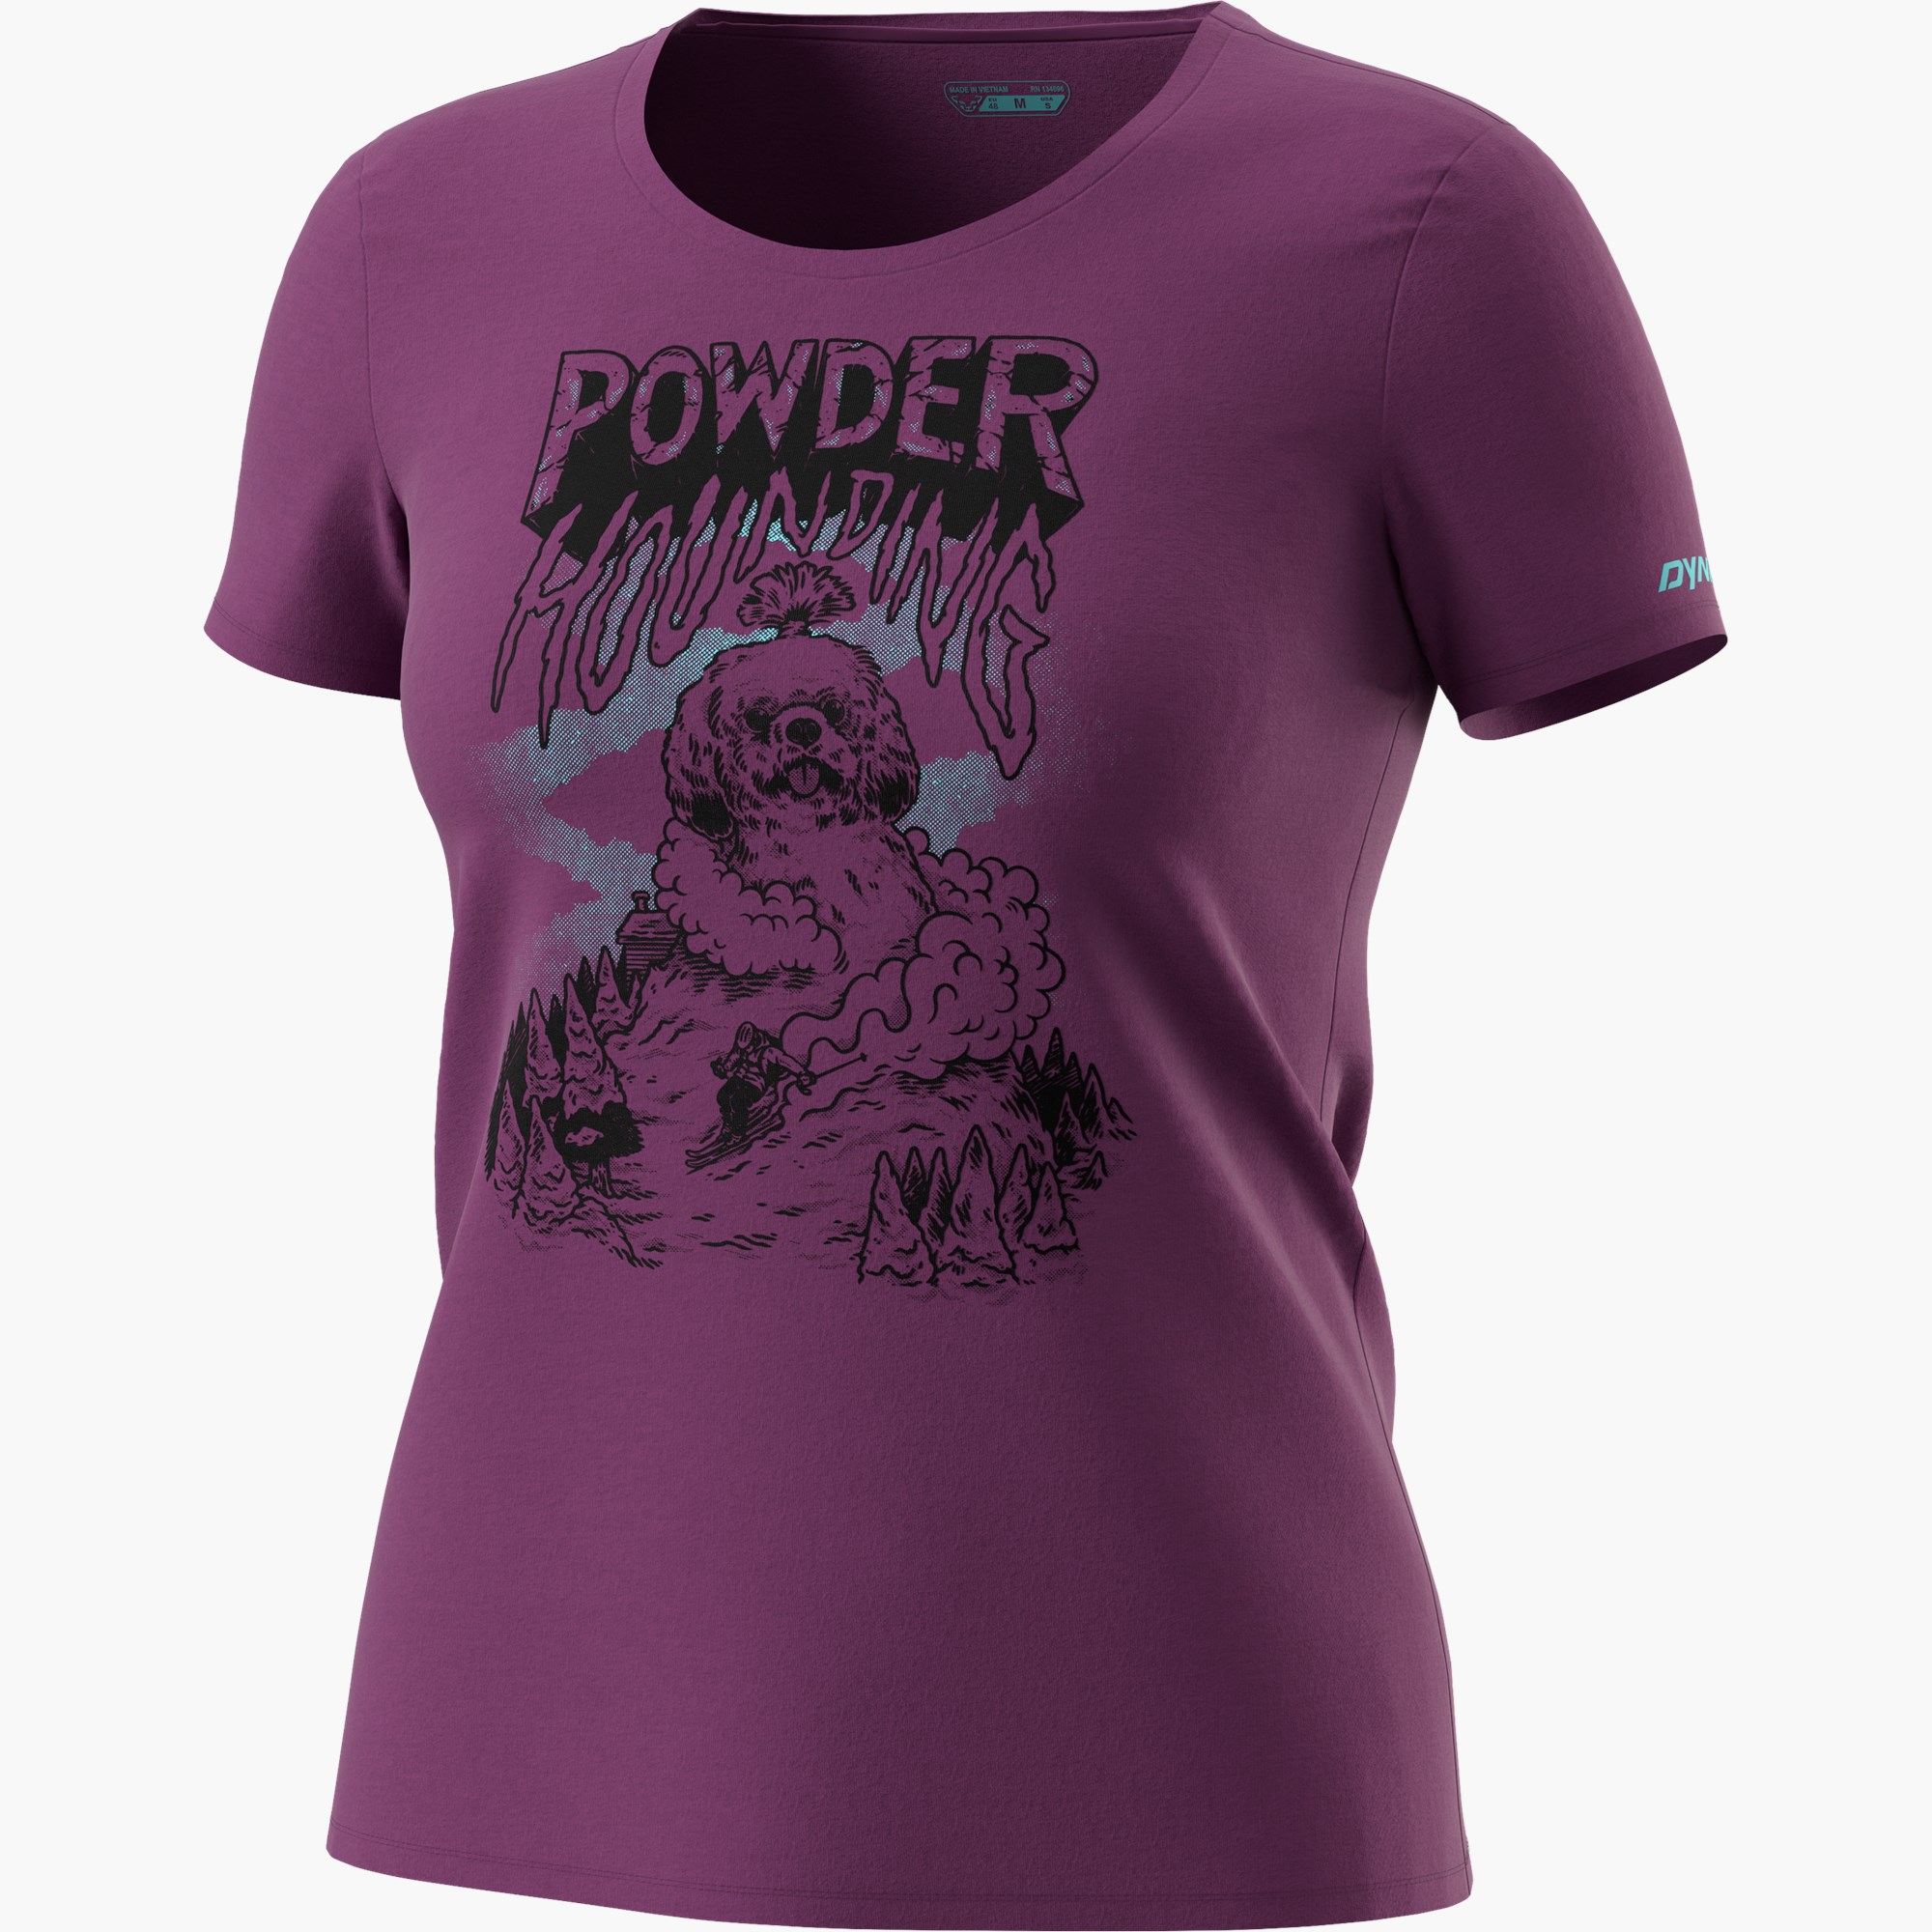 Passion purple/powder hounding_6731